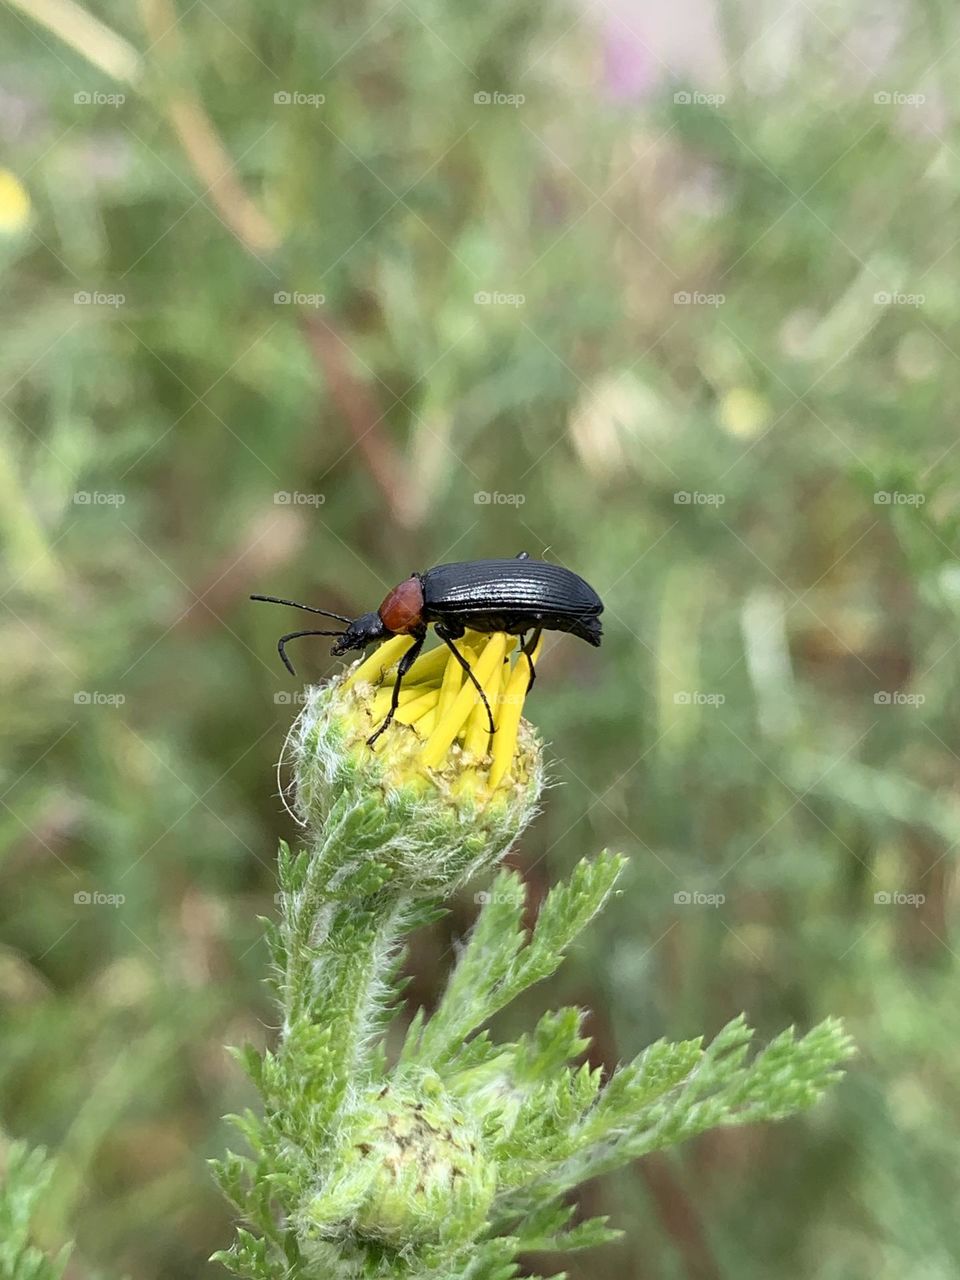 Bug on the flower 